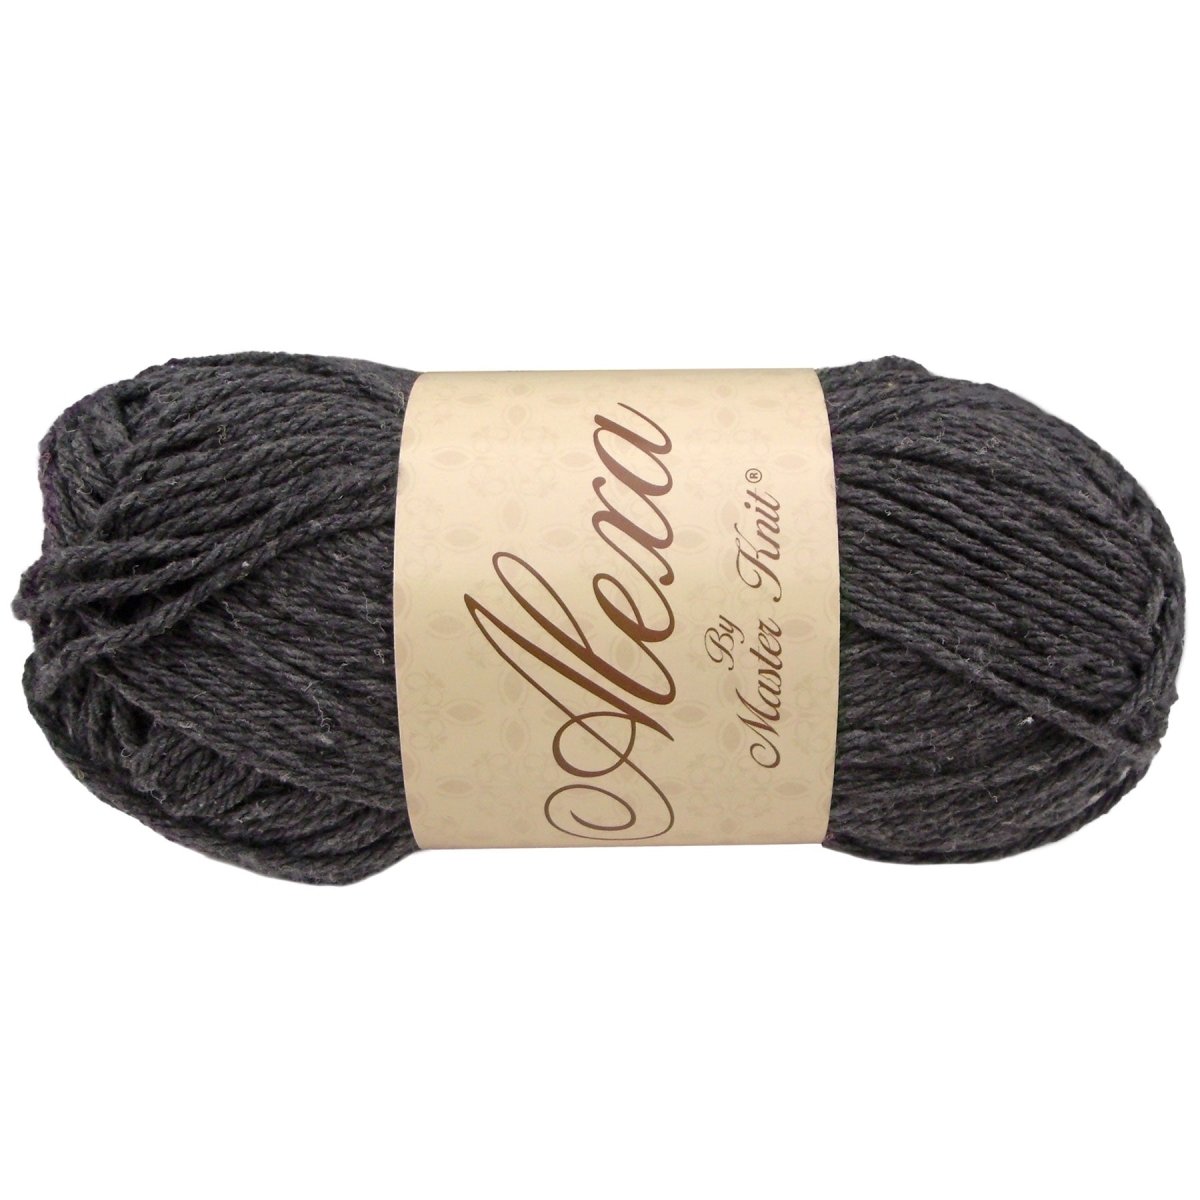 ALEXA - Crochetstores9340-928